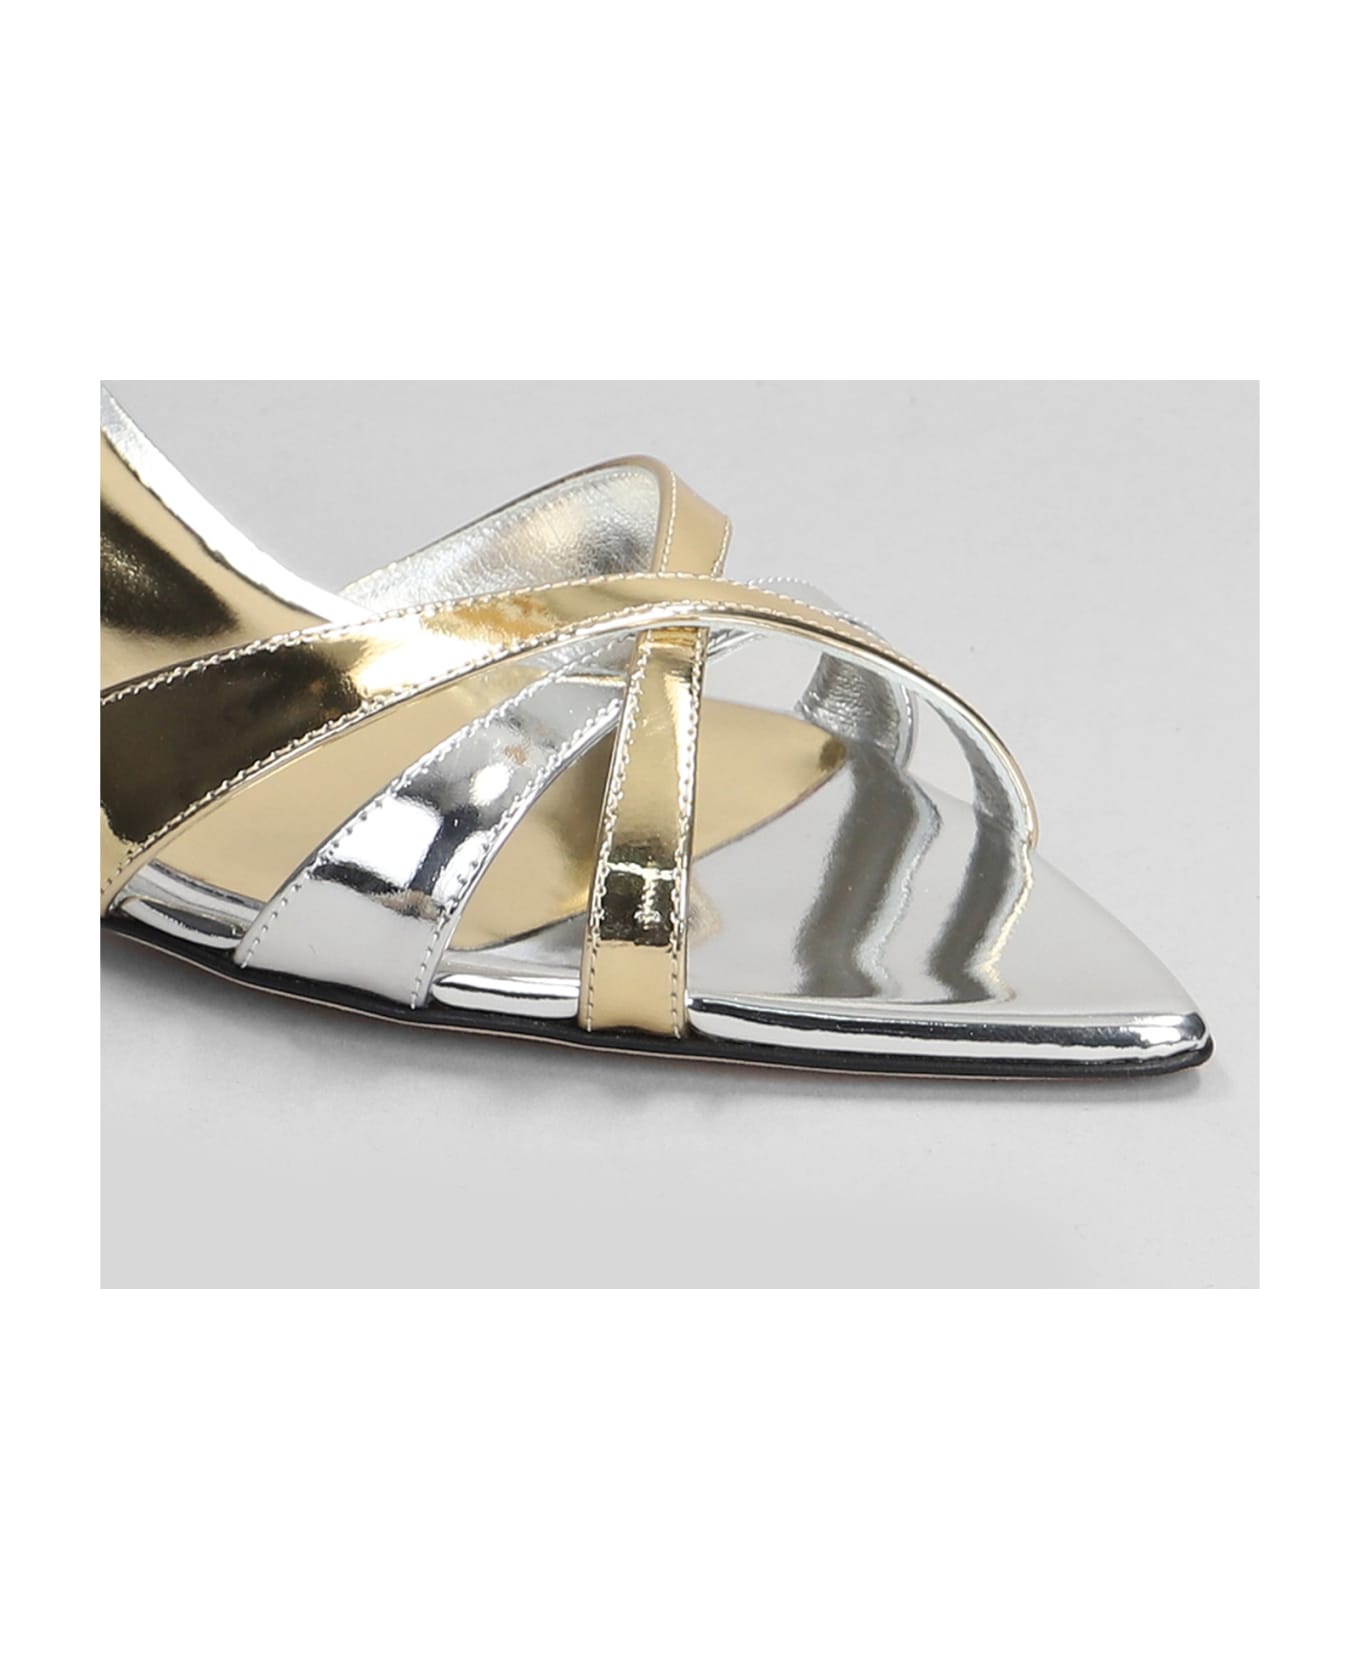 3JUIN Kyara 055 Sandals In Silver Leather - silver